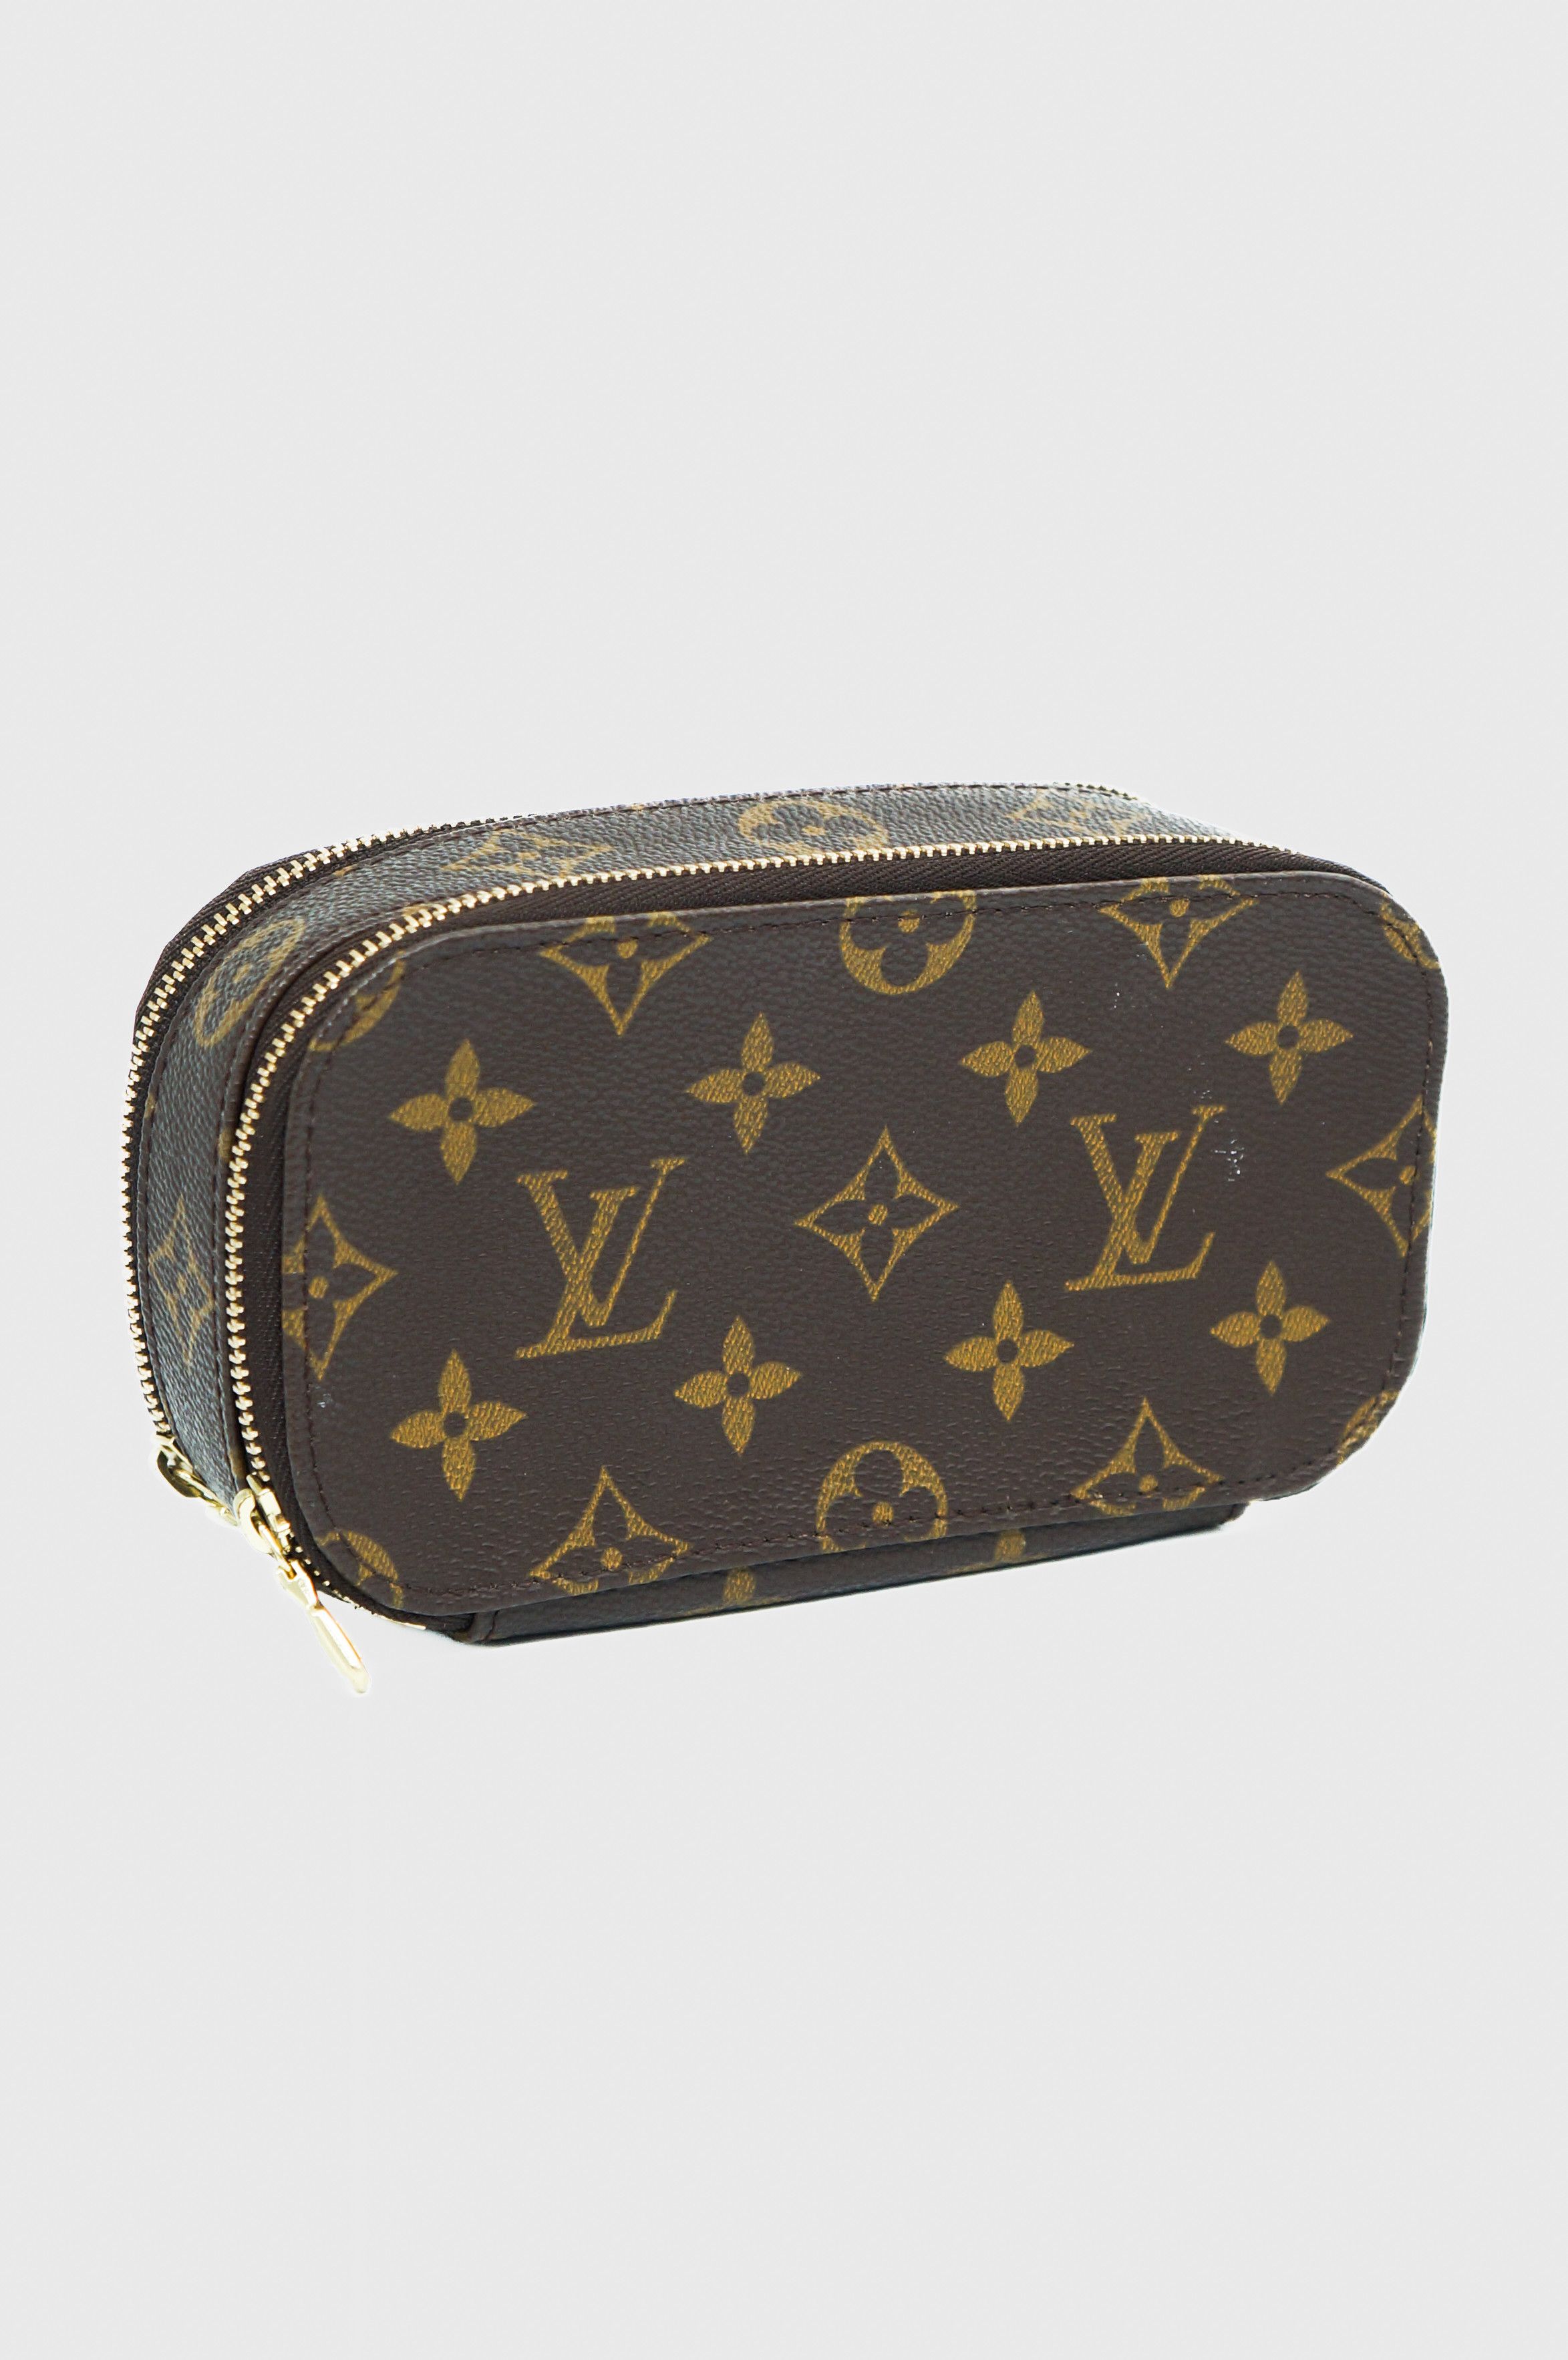 Vintage Louis Vuitton Monogram Brown Trousse Blush Cosmetic Case